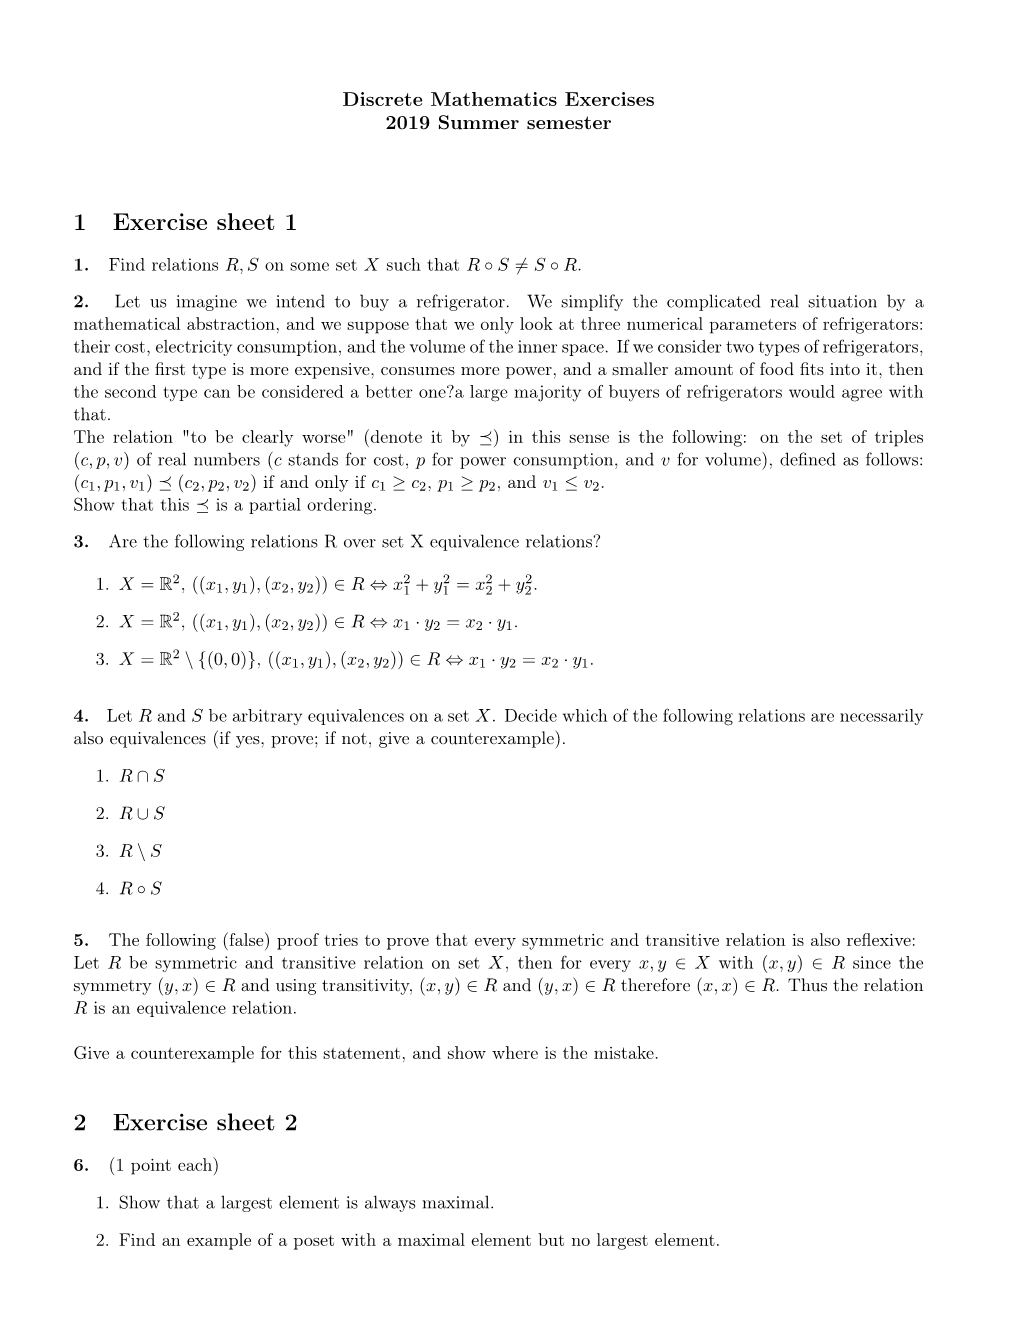 Discrete Mathematics Exercises 2019 Summer Semester